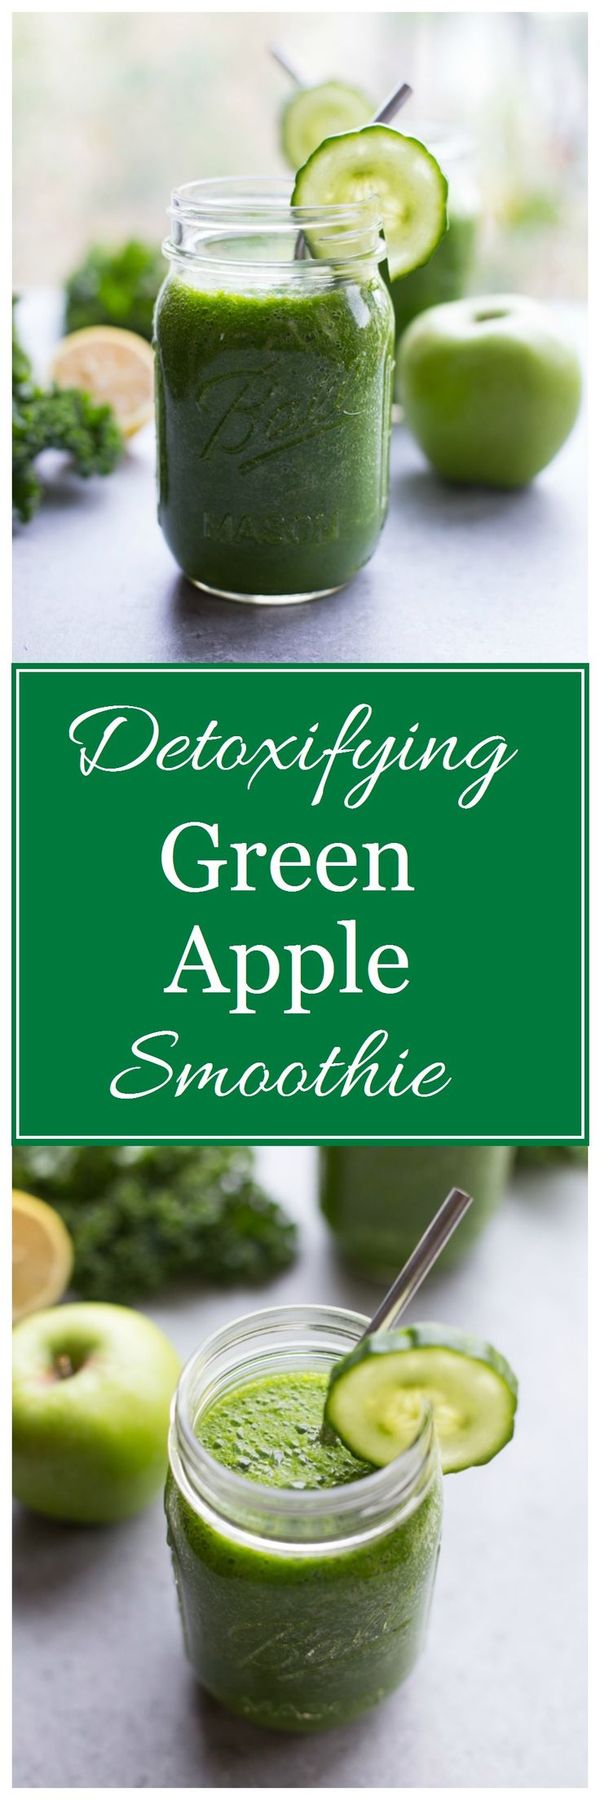 Detoxifying Green Apple Smoothie